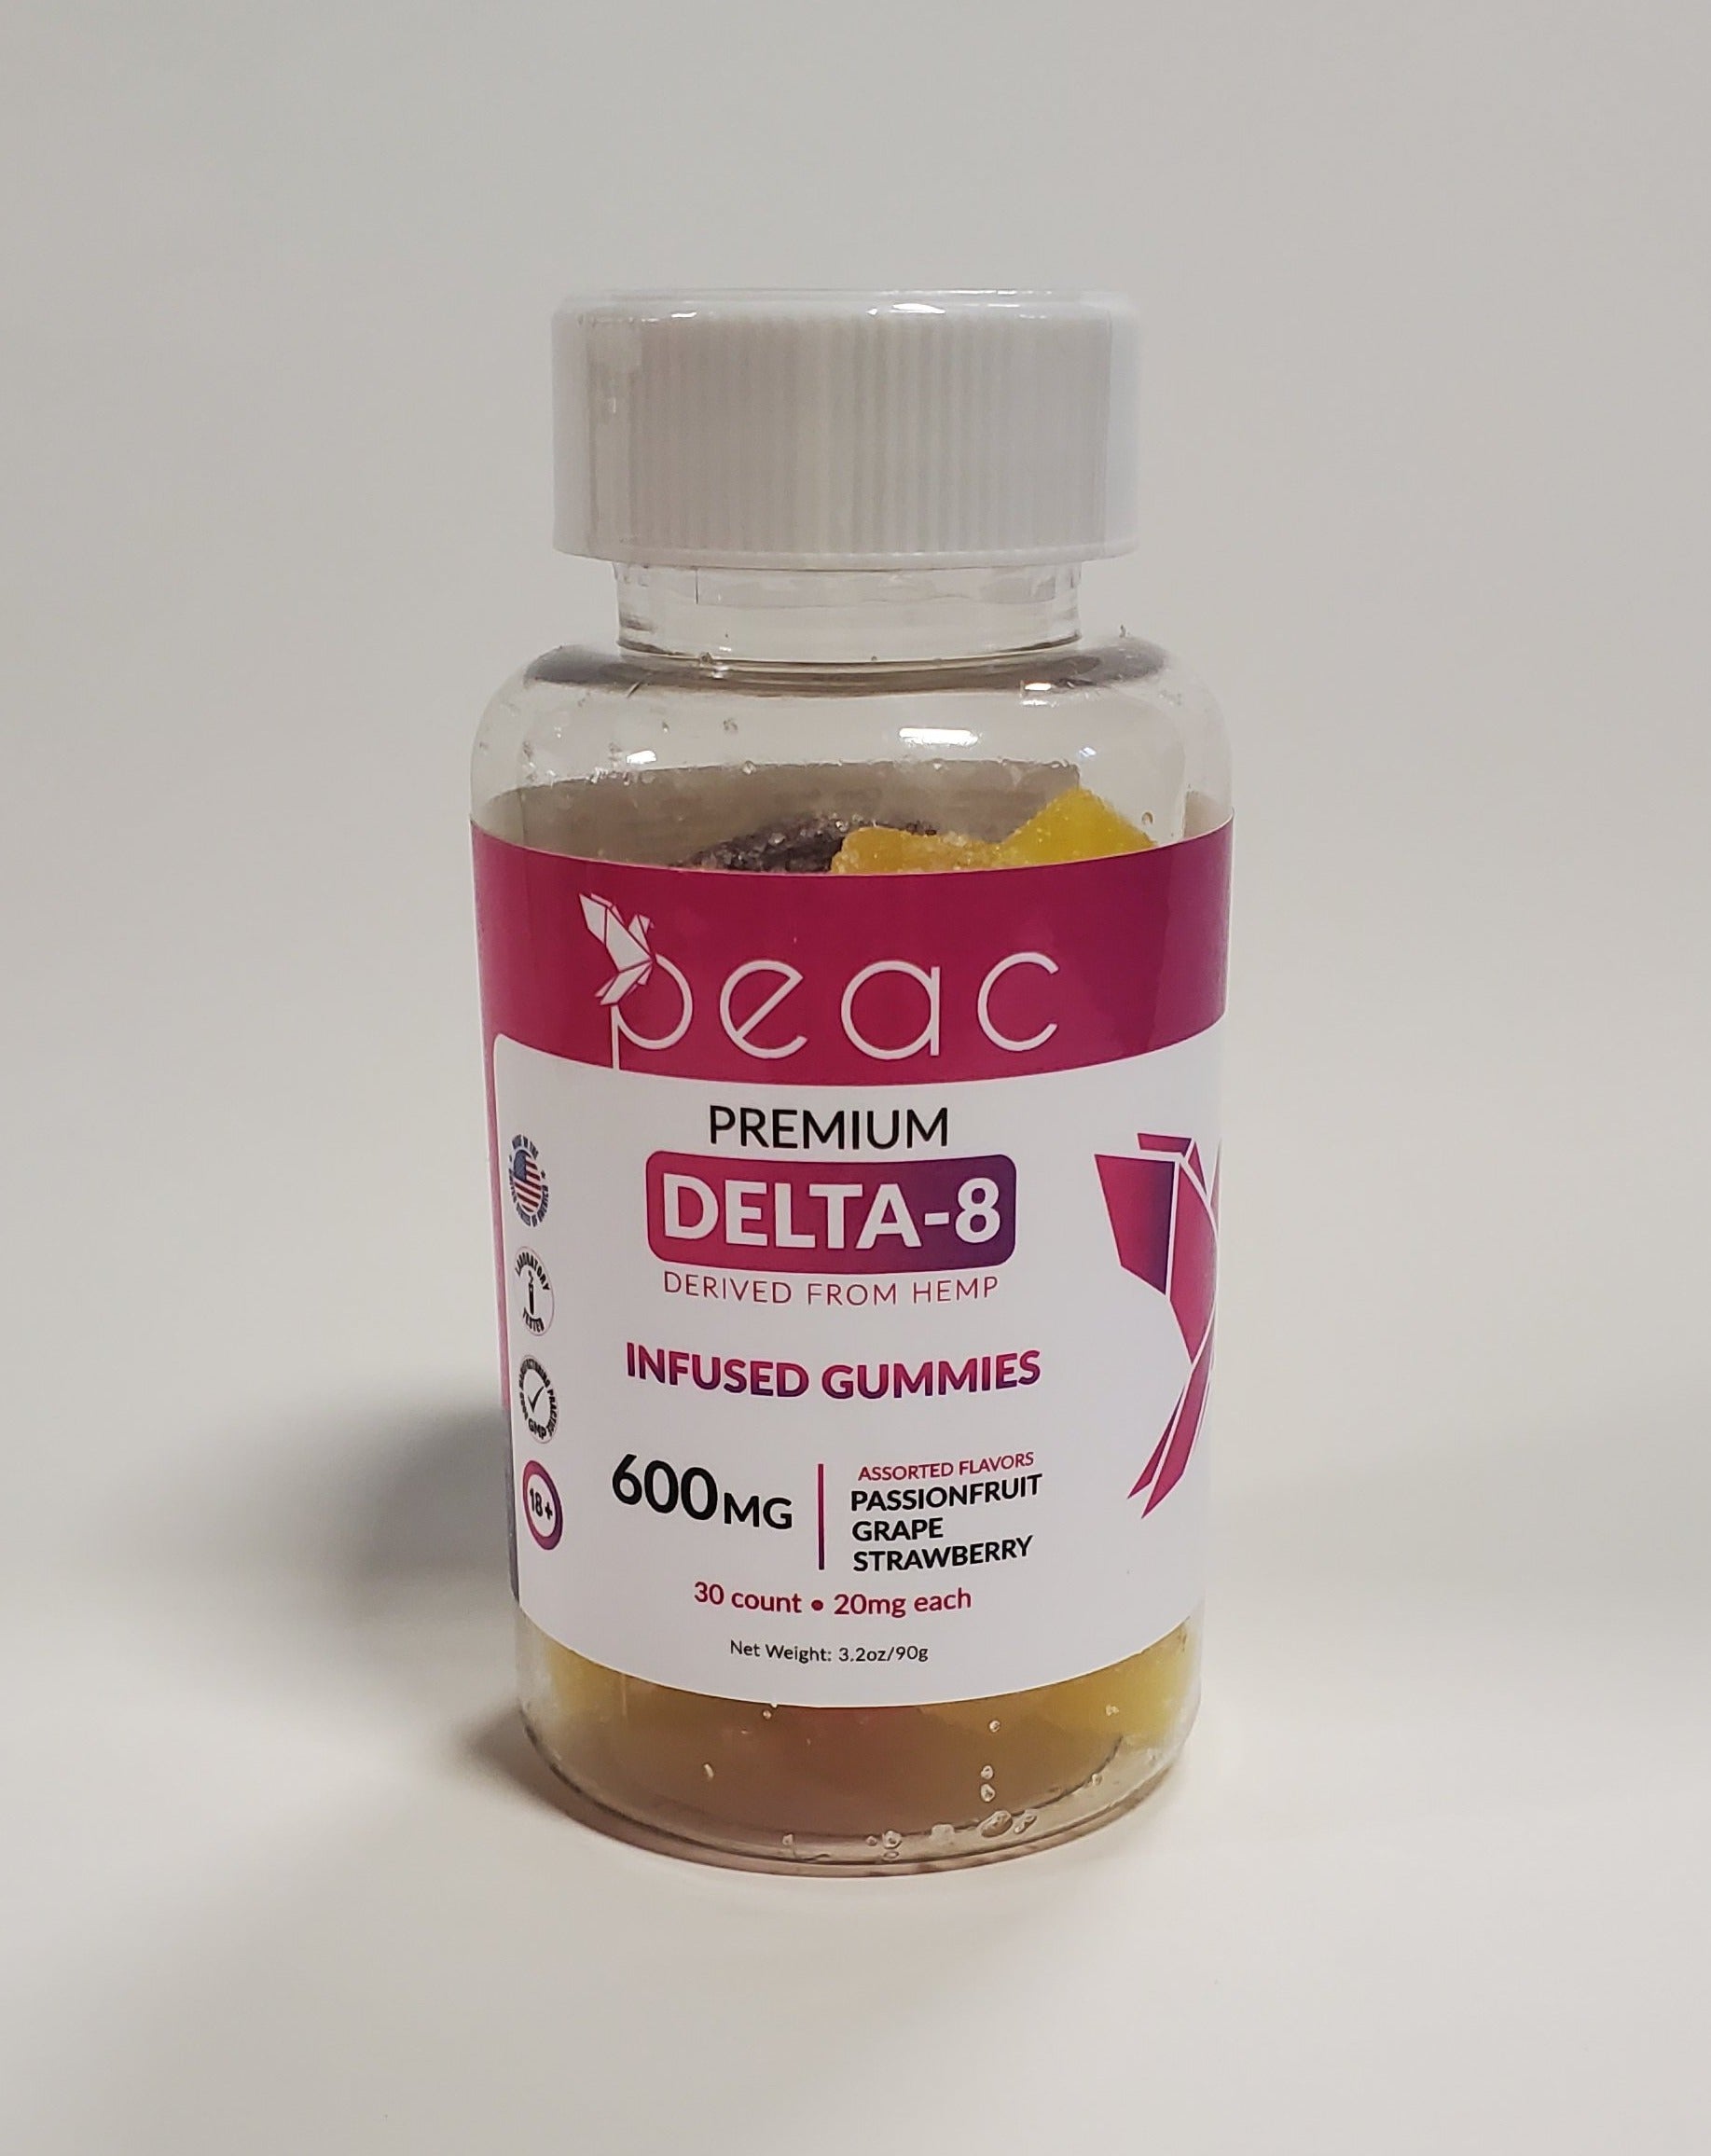 Premium Delta 8 Infused Gummies 600mg - Peac Wellness